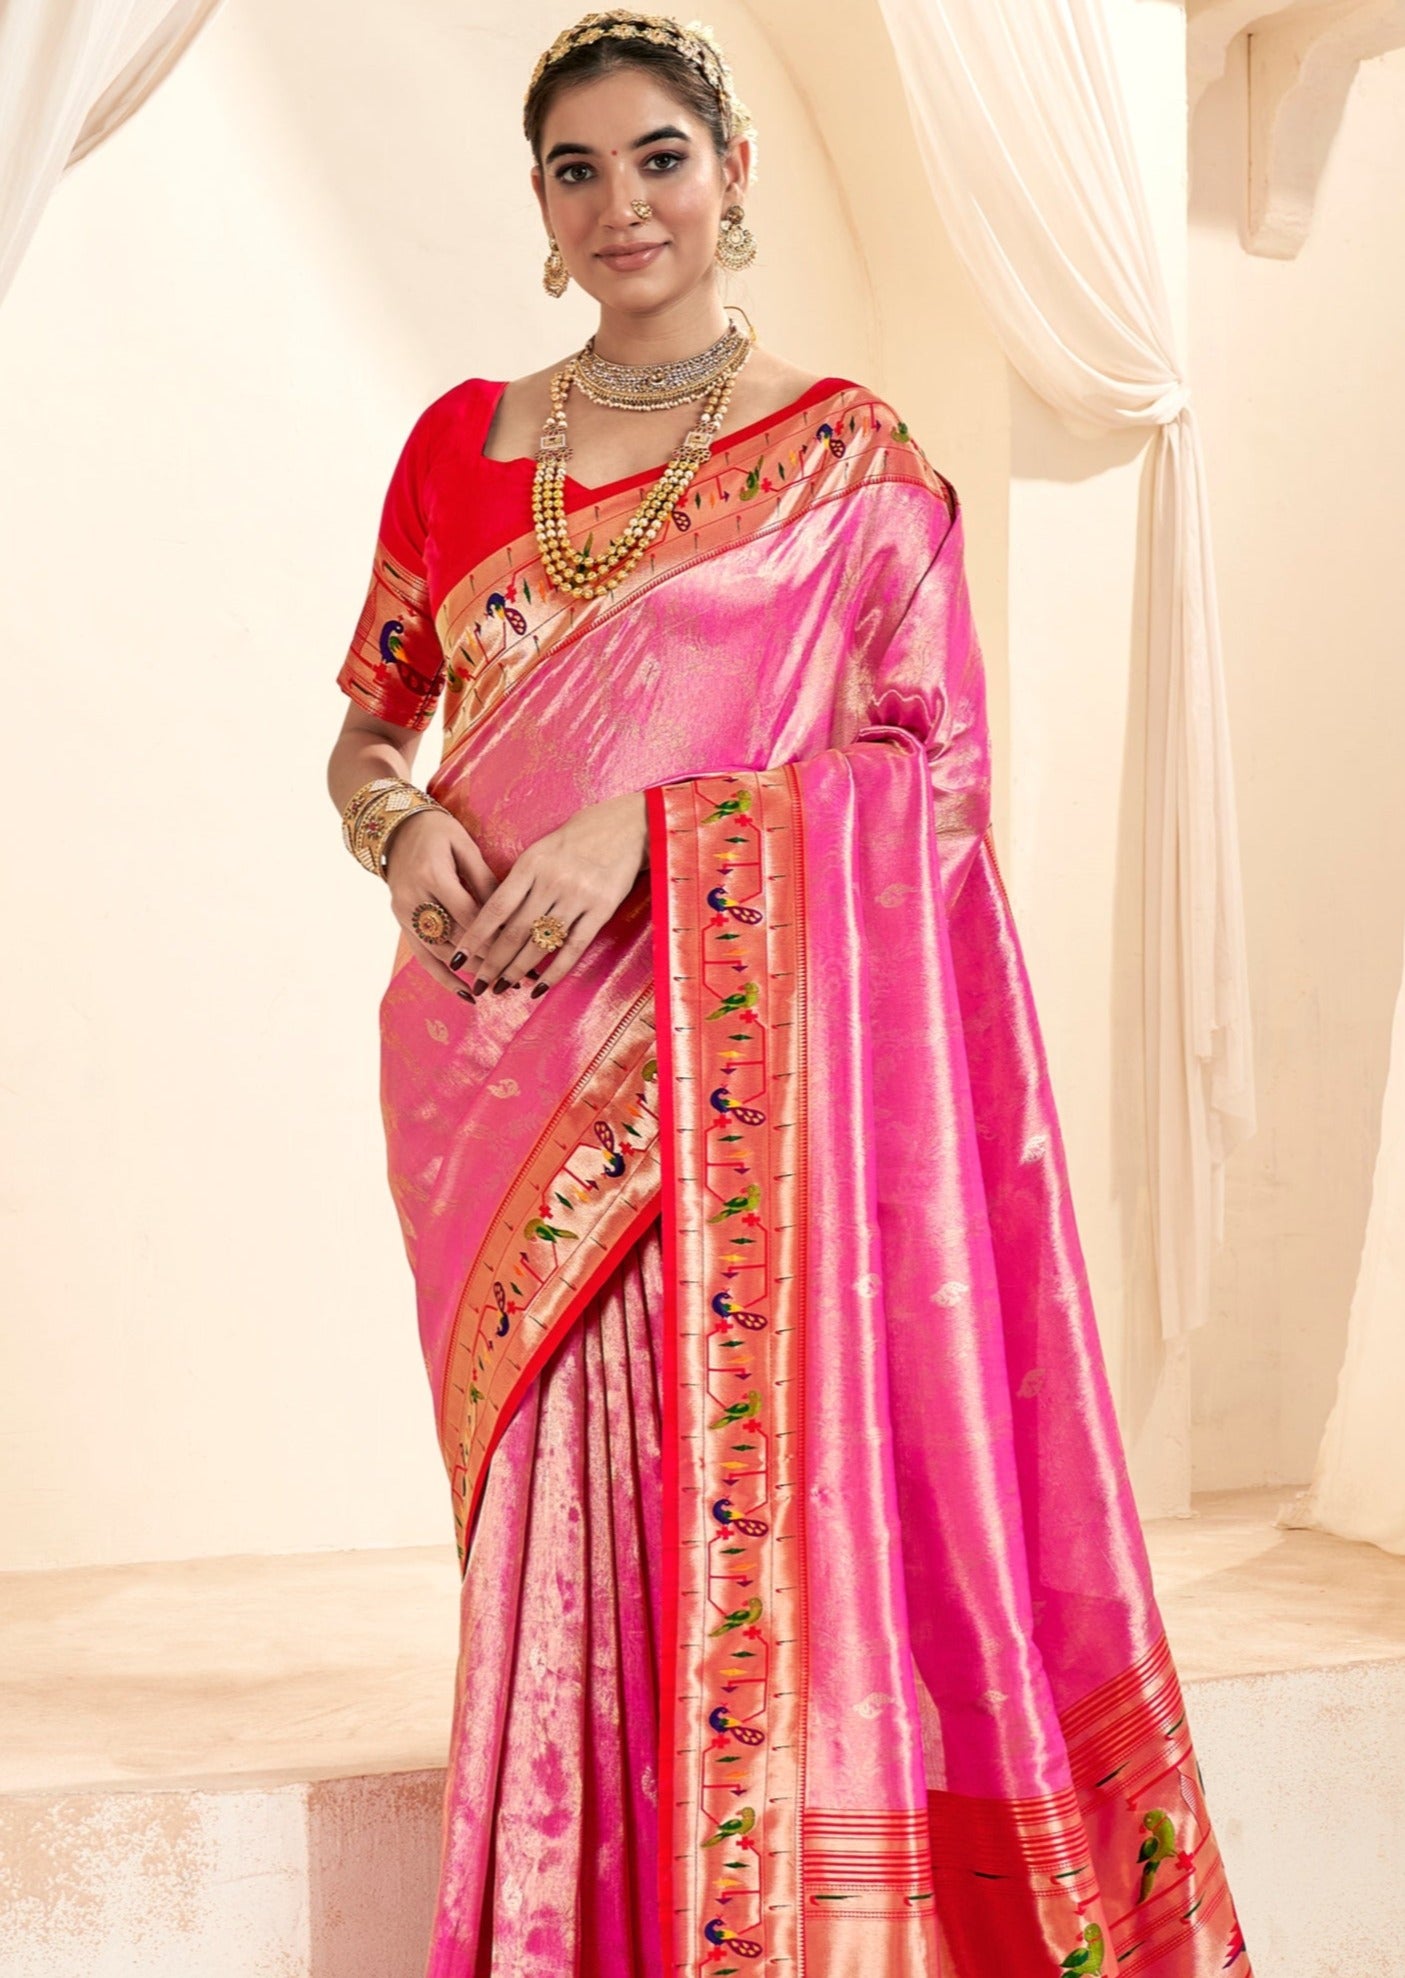 Handloom paithani silk rose pink bridal saree online shopping for marathi wedding look.